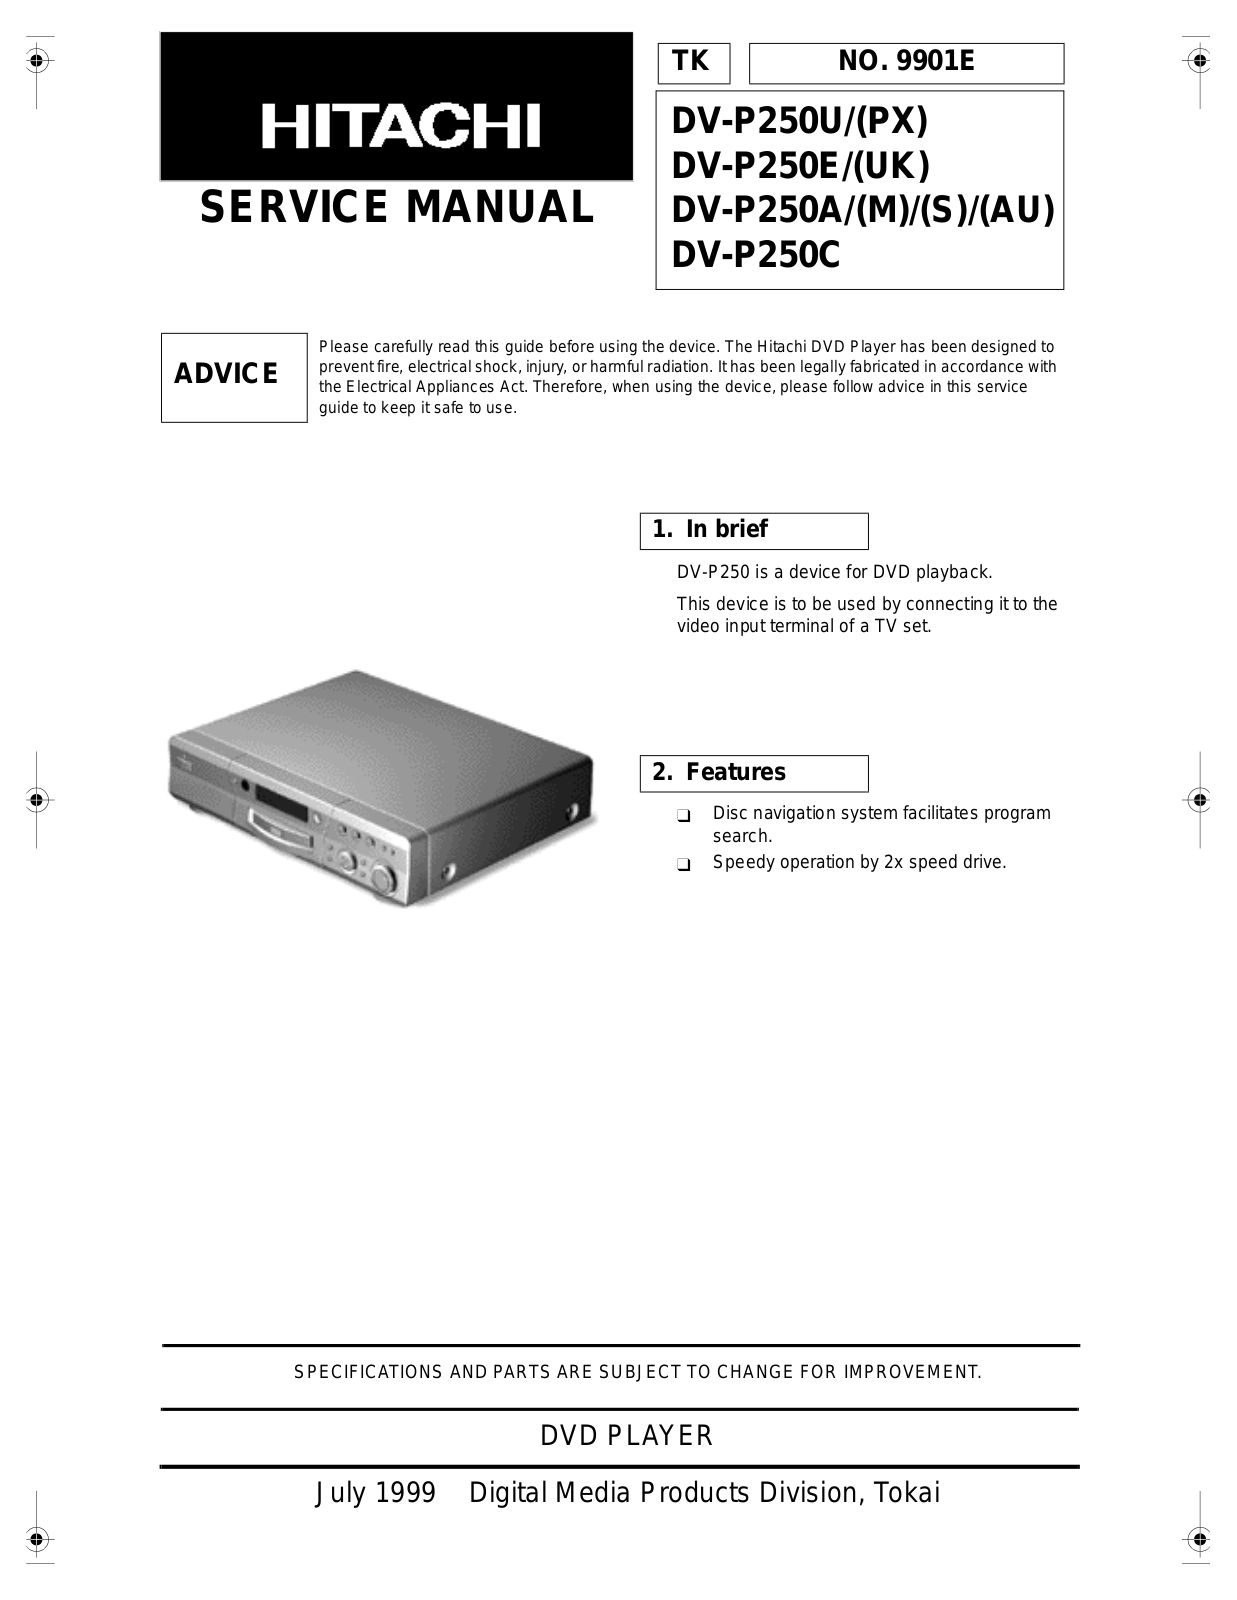 Hitachi DVP-250-E, DVP-250-C, DVP-250-A, DVP-250-U Service Manual